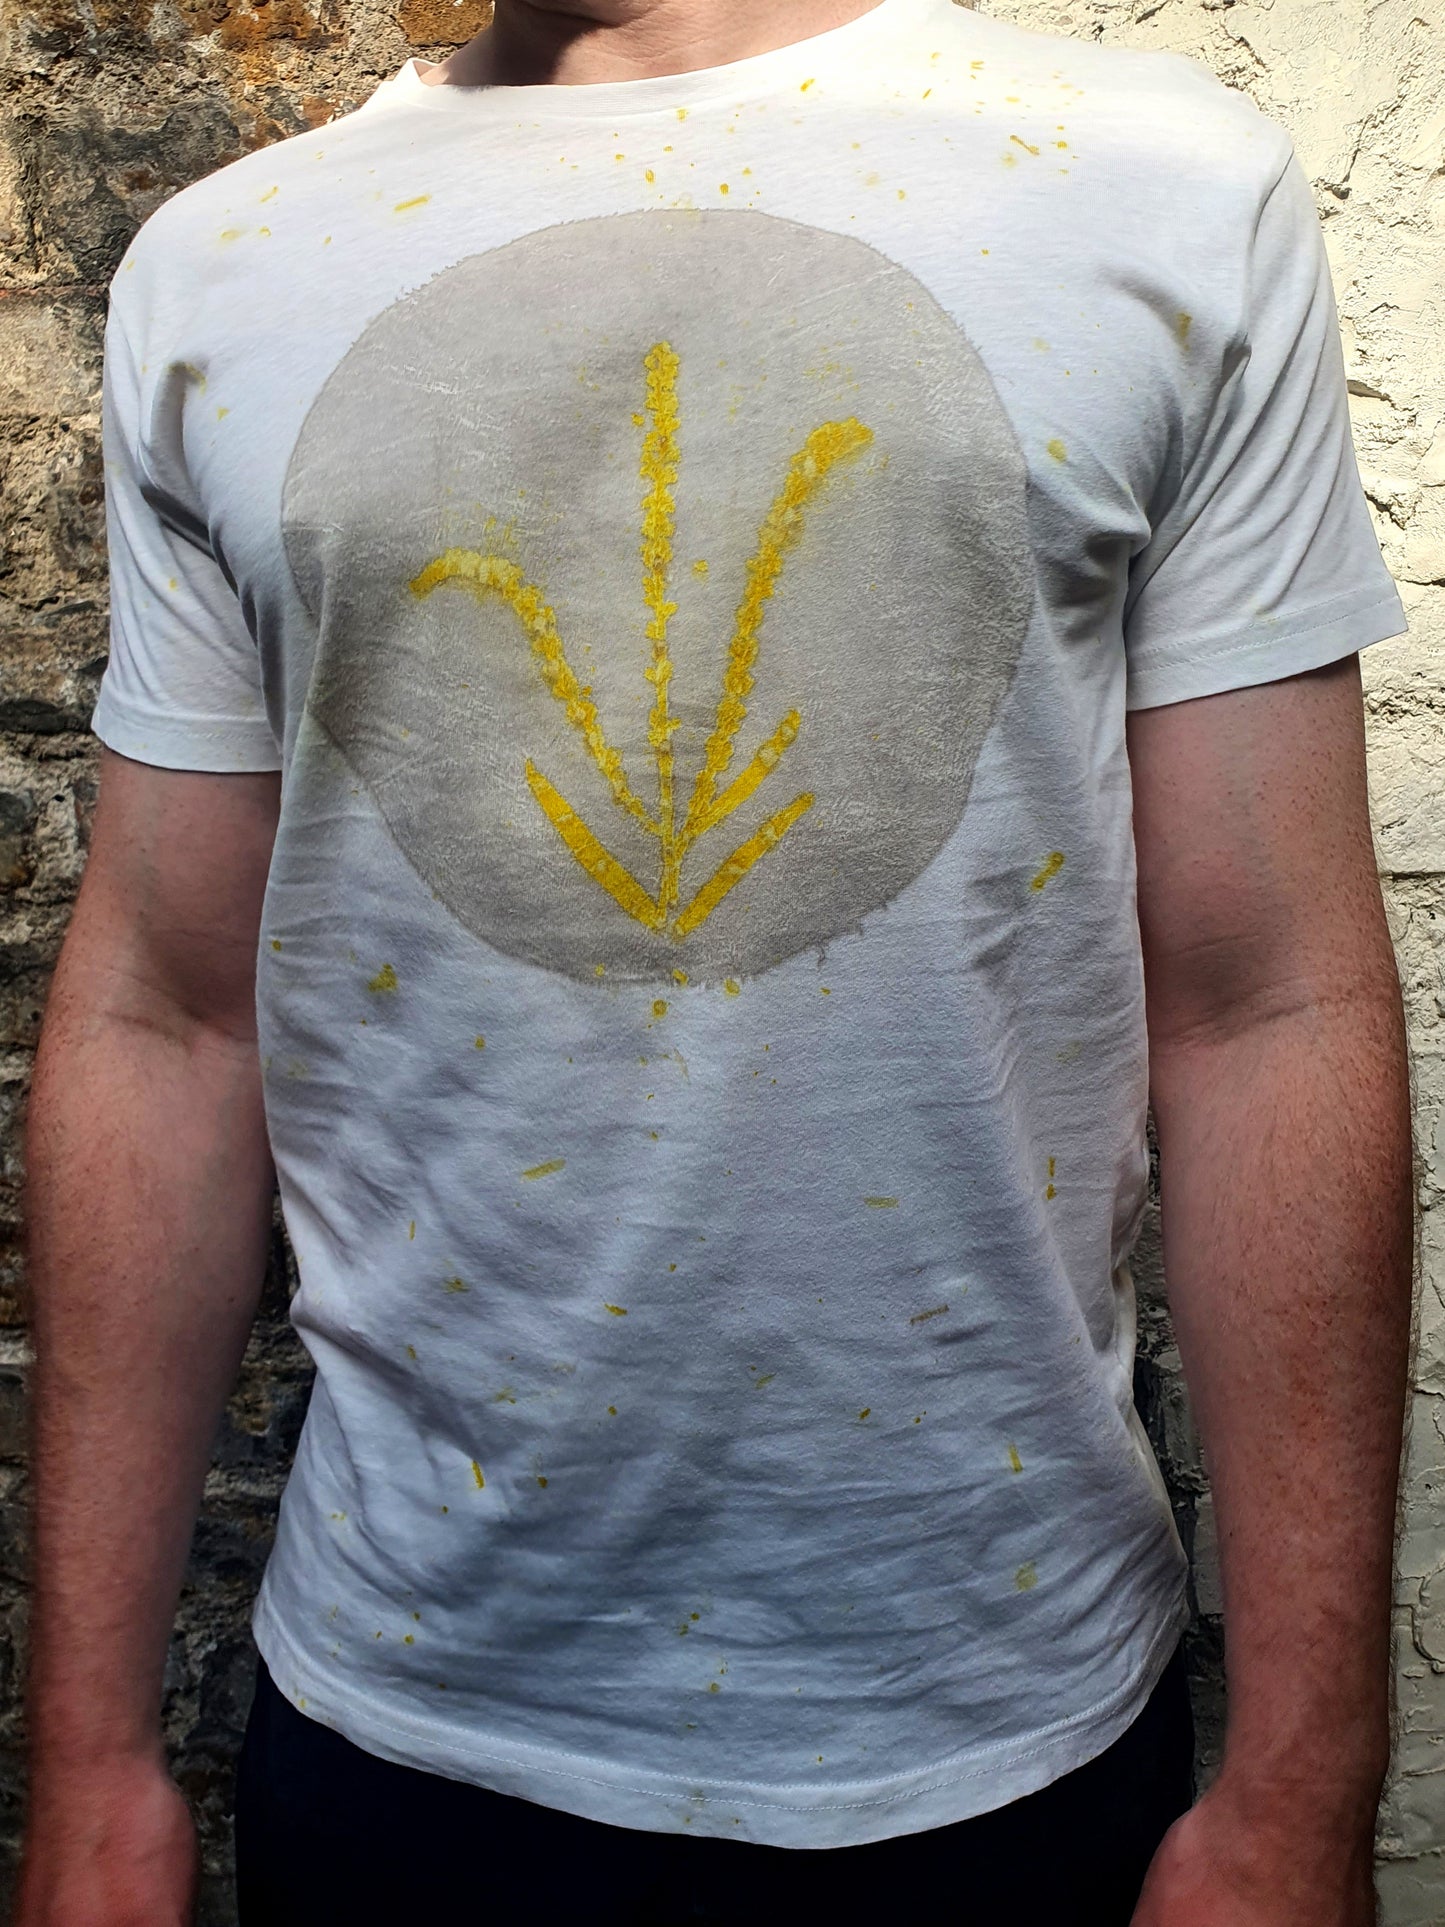 Weld Sphere Organic Cotton T-Shirt in Lemon and Stone